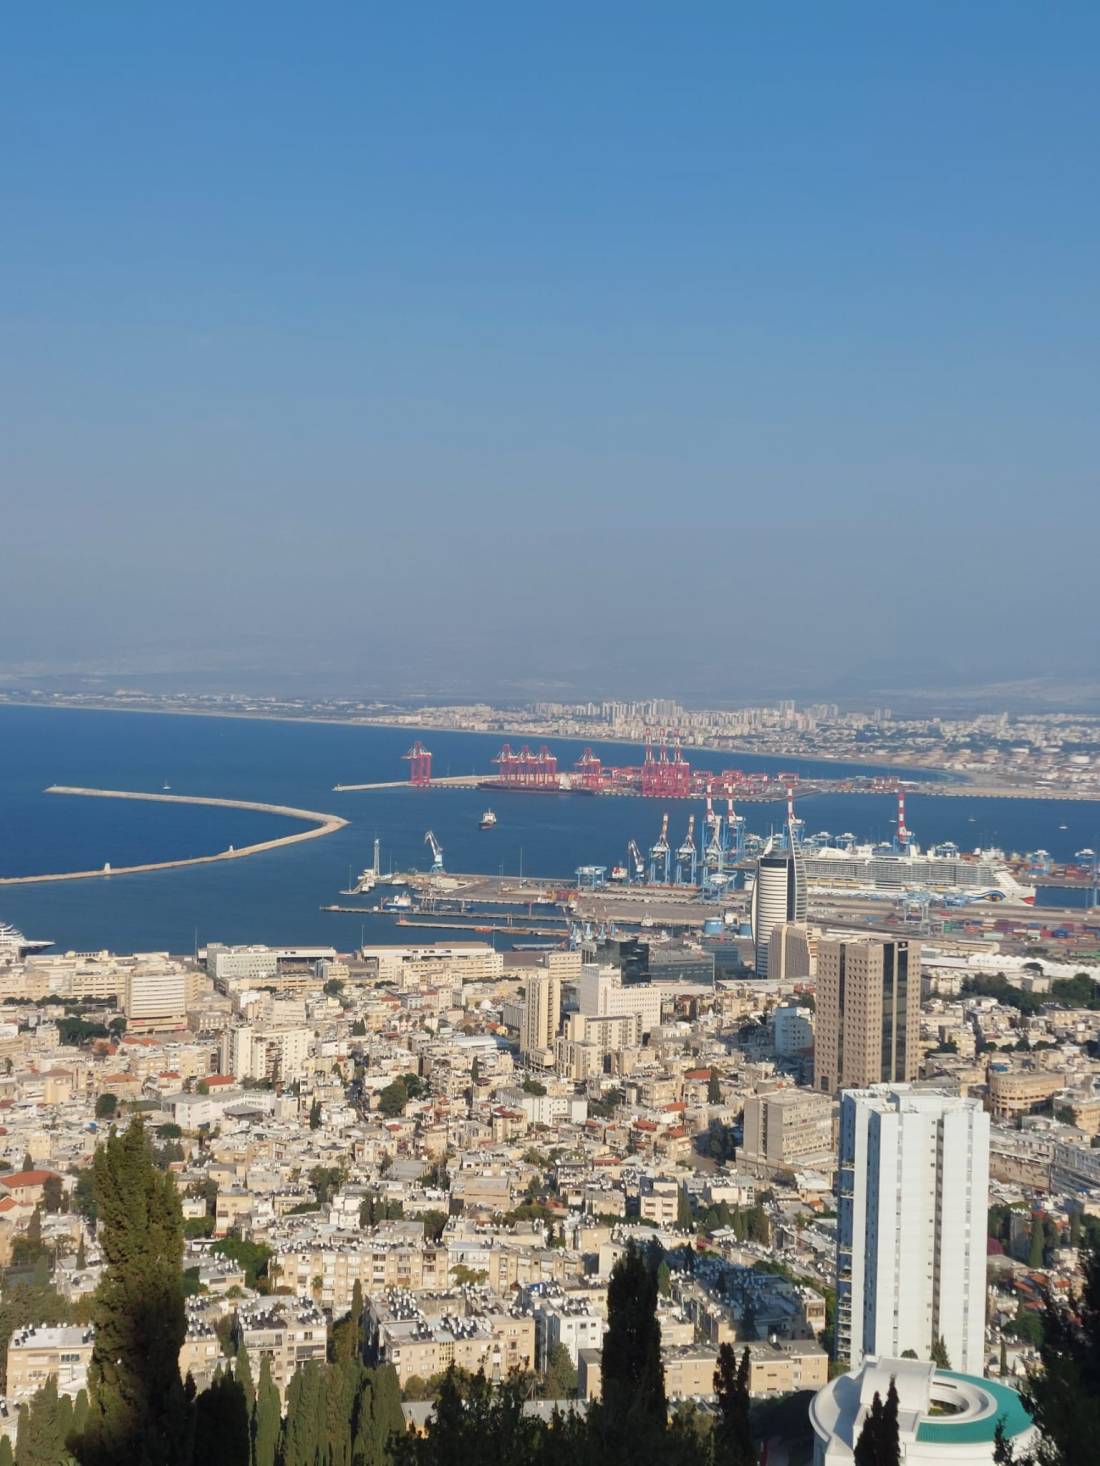 (c) CC Wikipedia BY 3.0. https://en.wikipedia.org/wiki/Port_of_Haifa#/media/File:Port_of_Haifa_2752-1.jpg